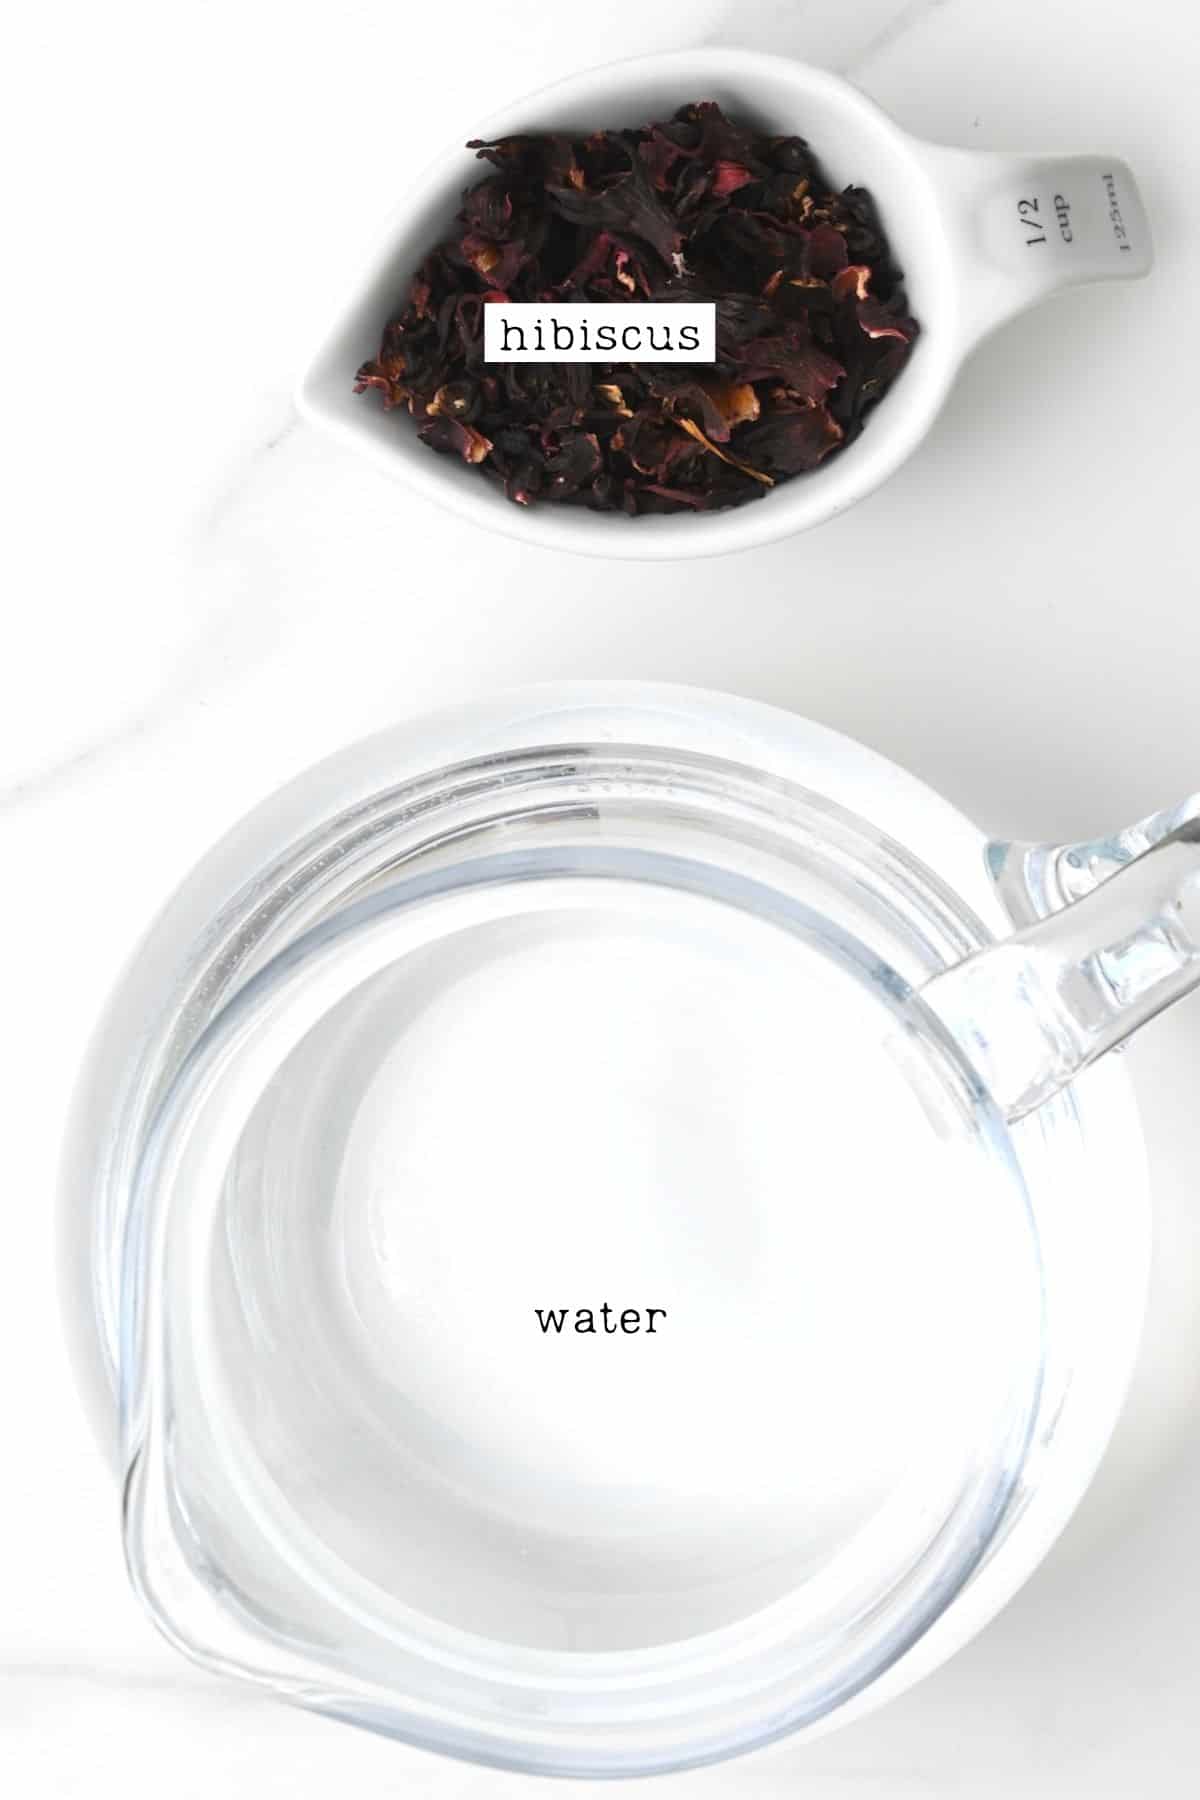 Ingredients for hibiscus tea